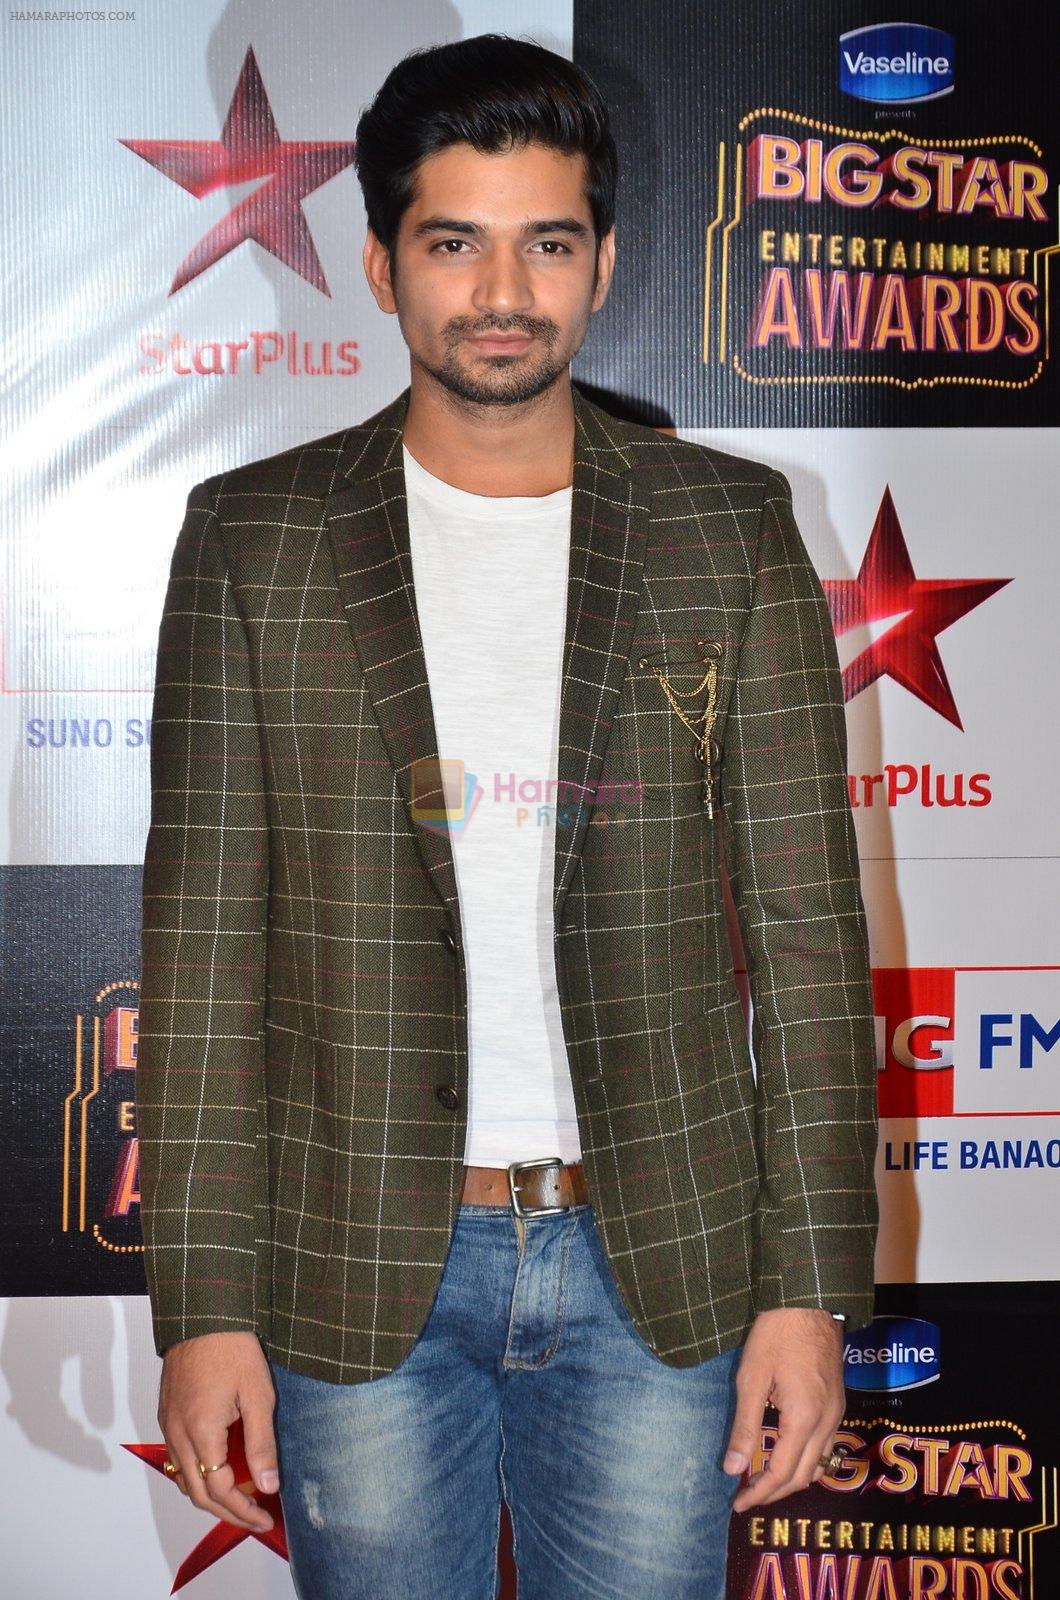 at Big Star Entertainment Awards Red Carpet in Mumbai on 18th Dec 2014